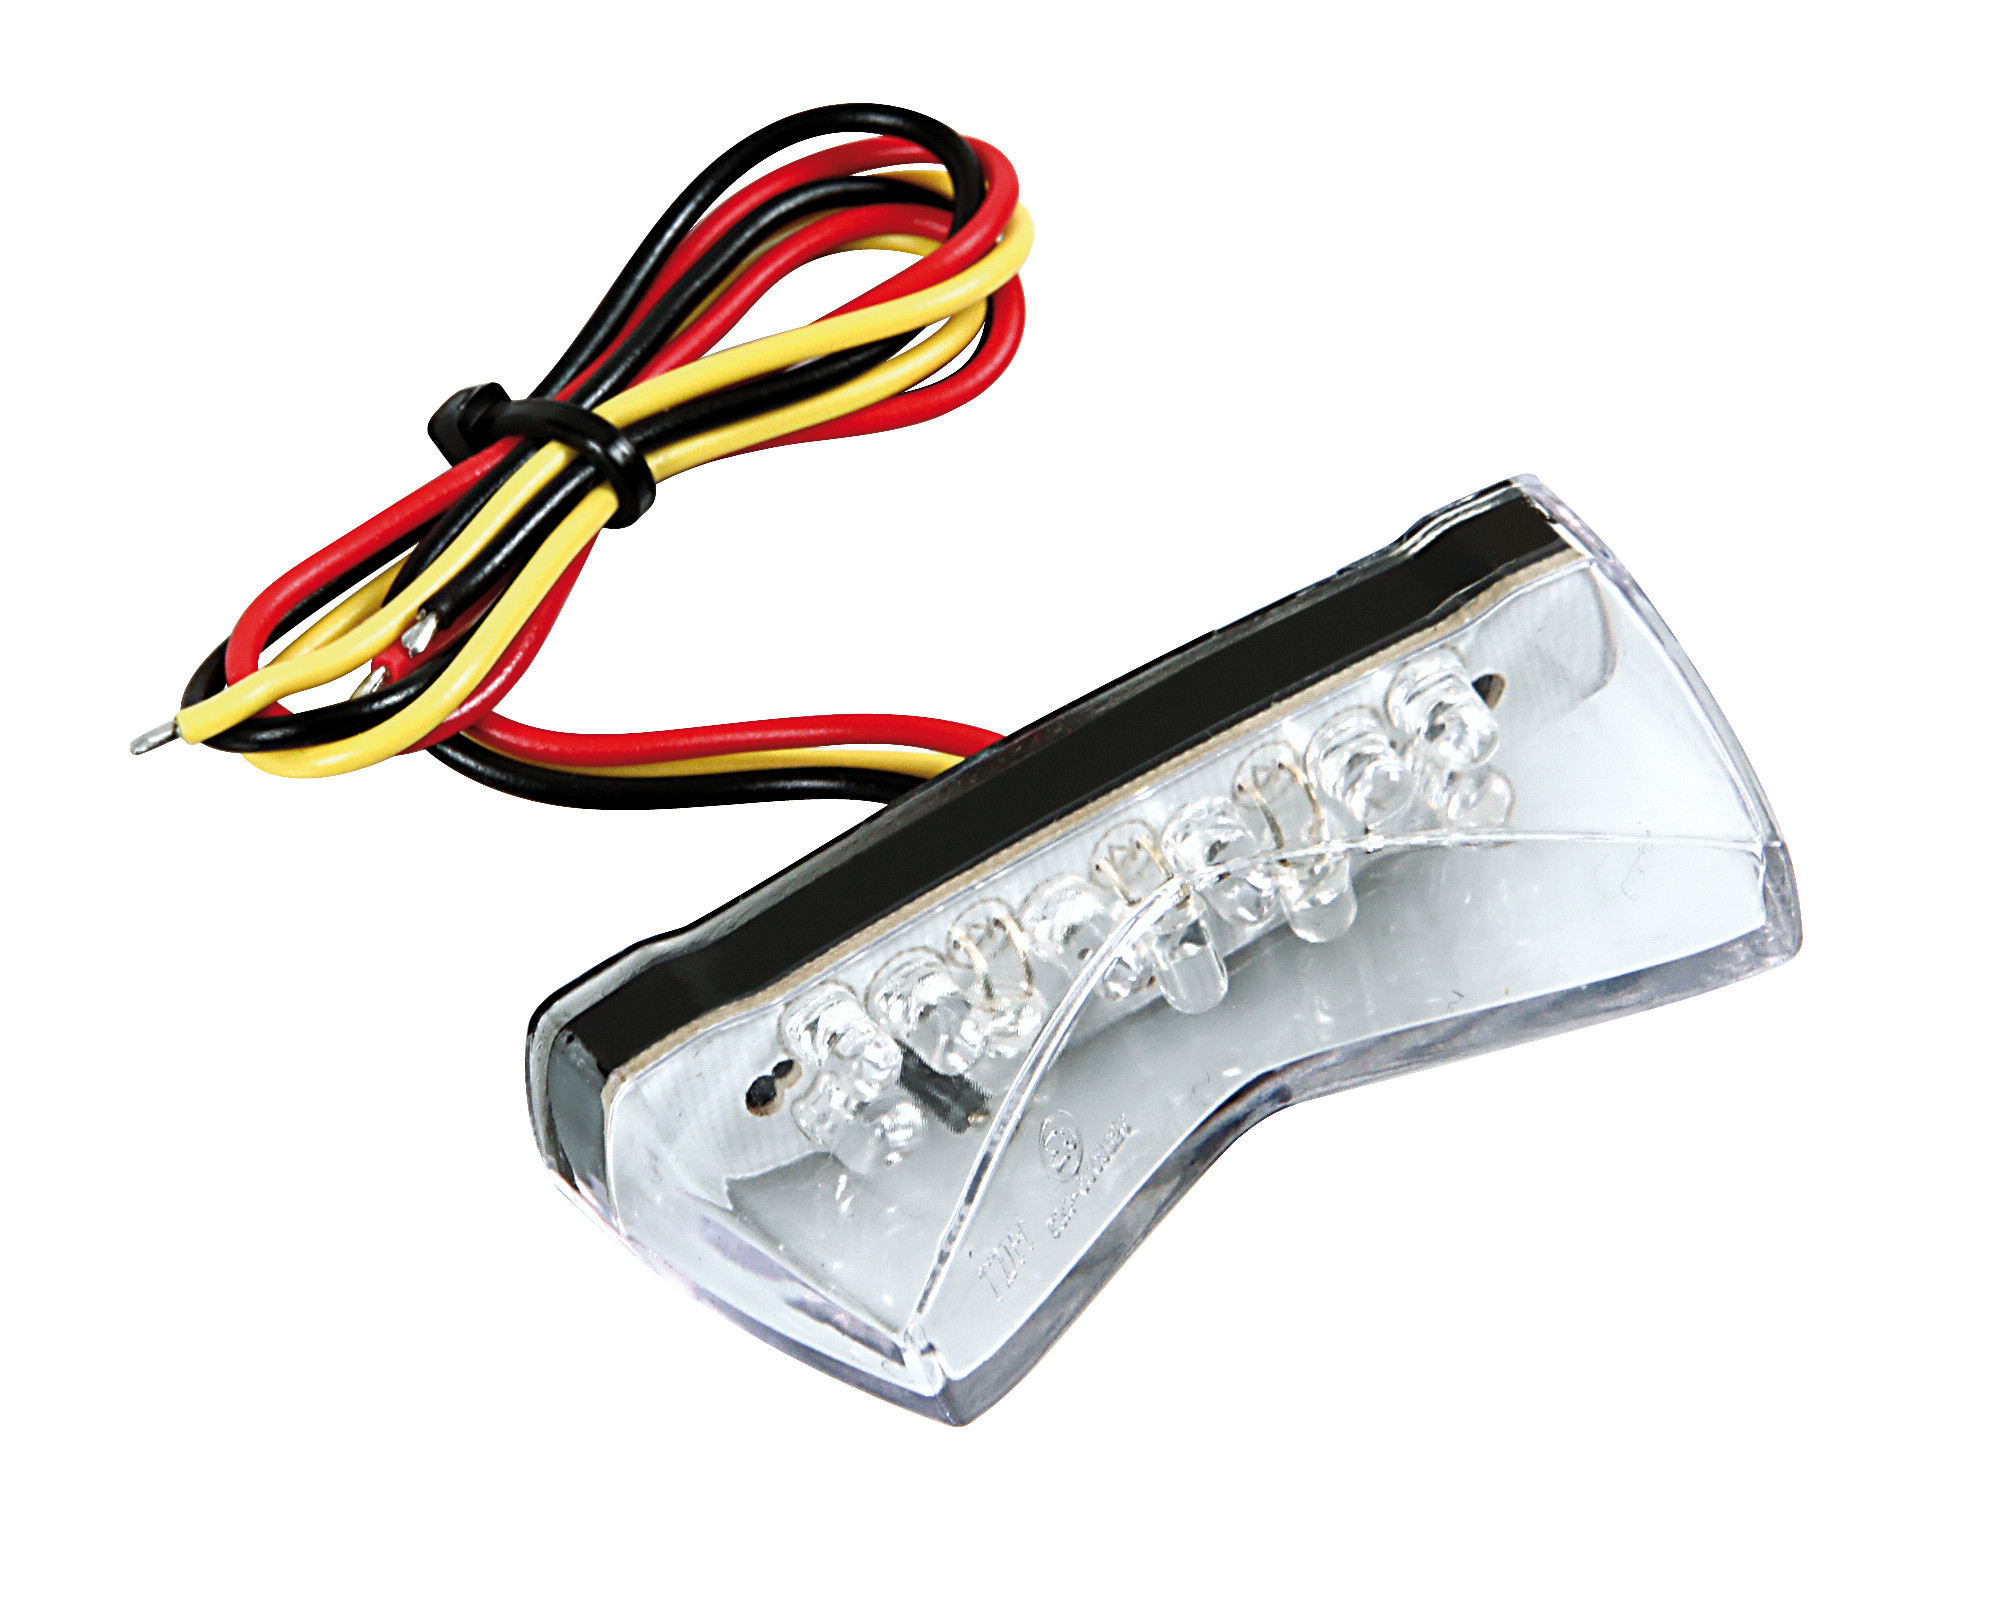 Lampa stop LED cu 3 functii Concept 12V Garage AutoRide